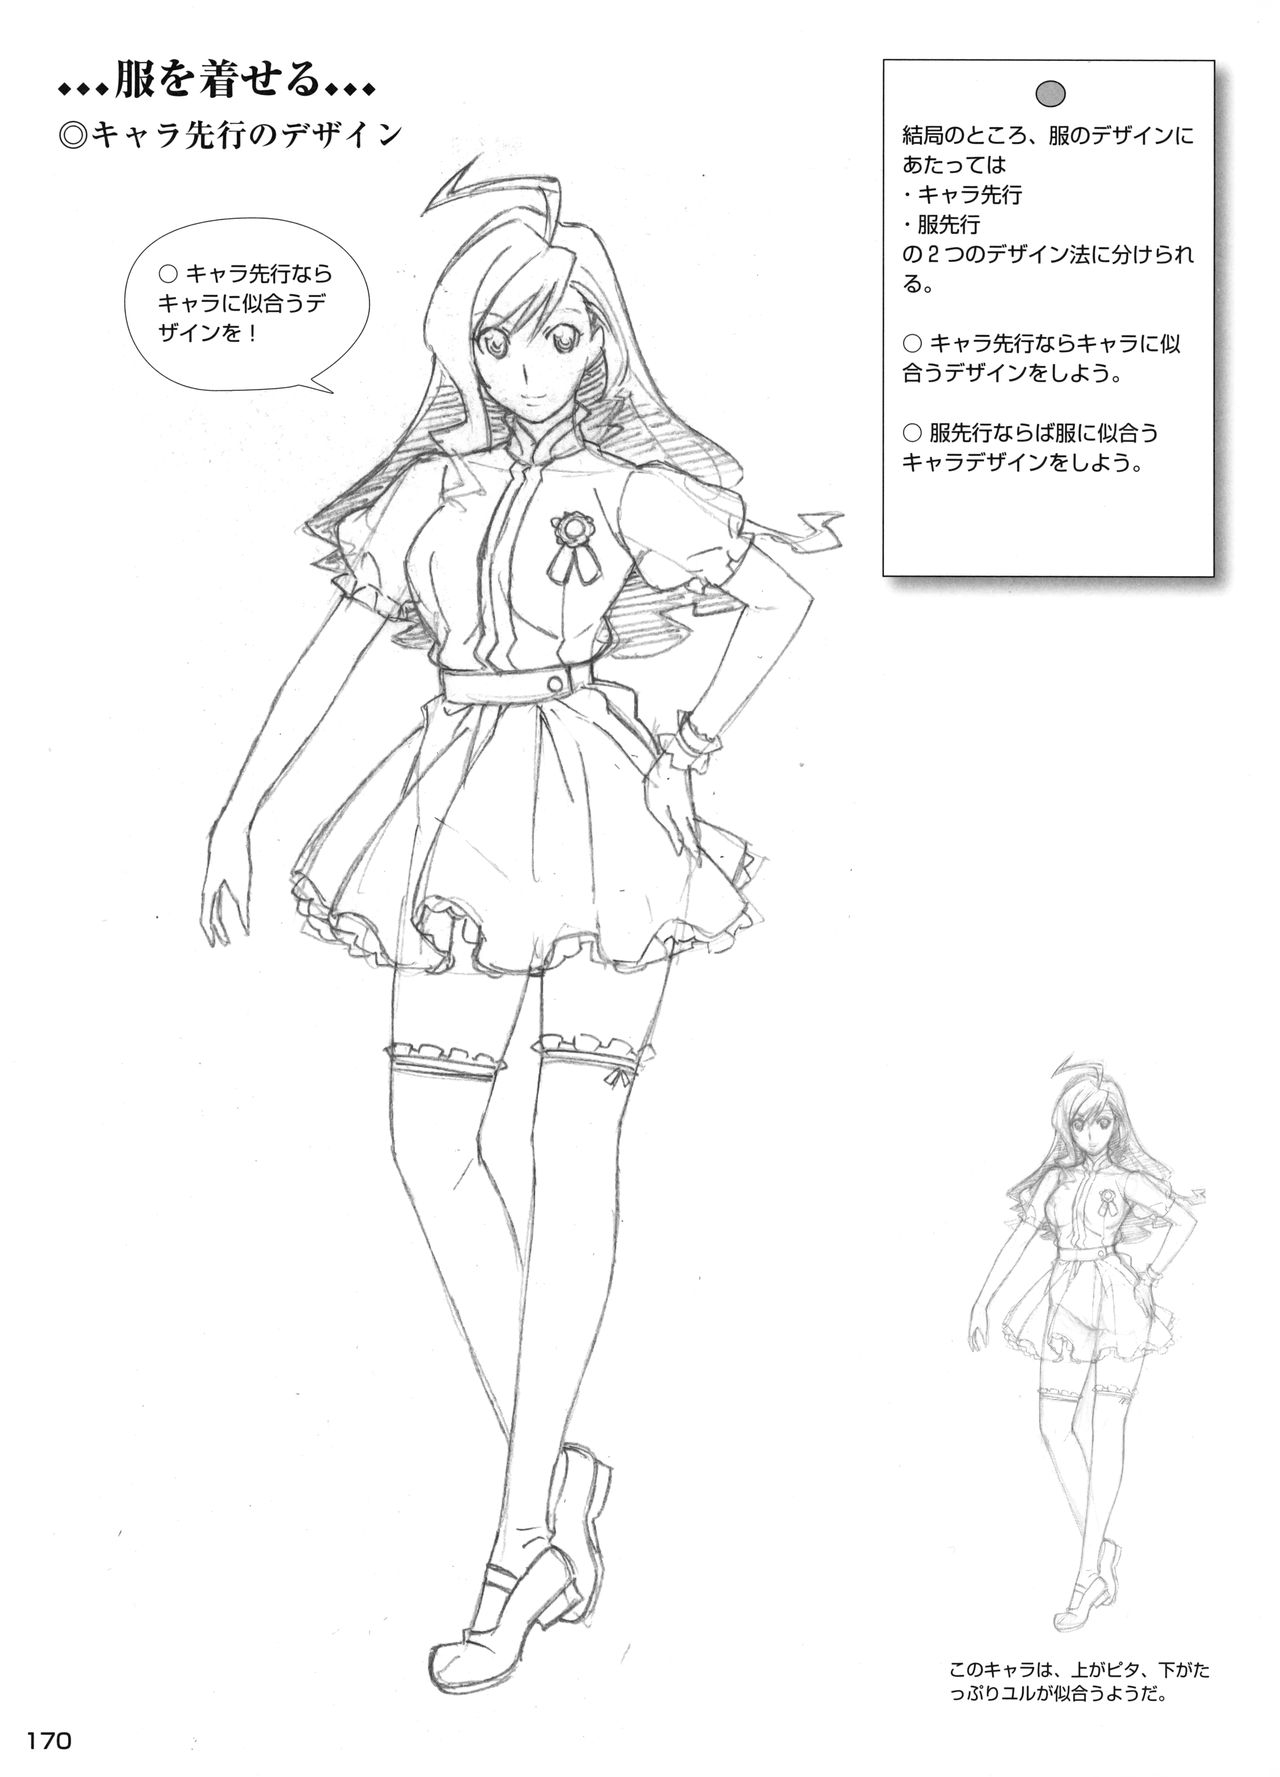 Manga no Kiso Dessin - Onnanoko Costume hen 170